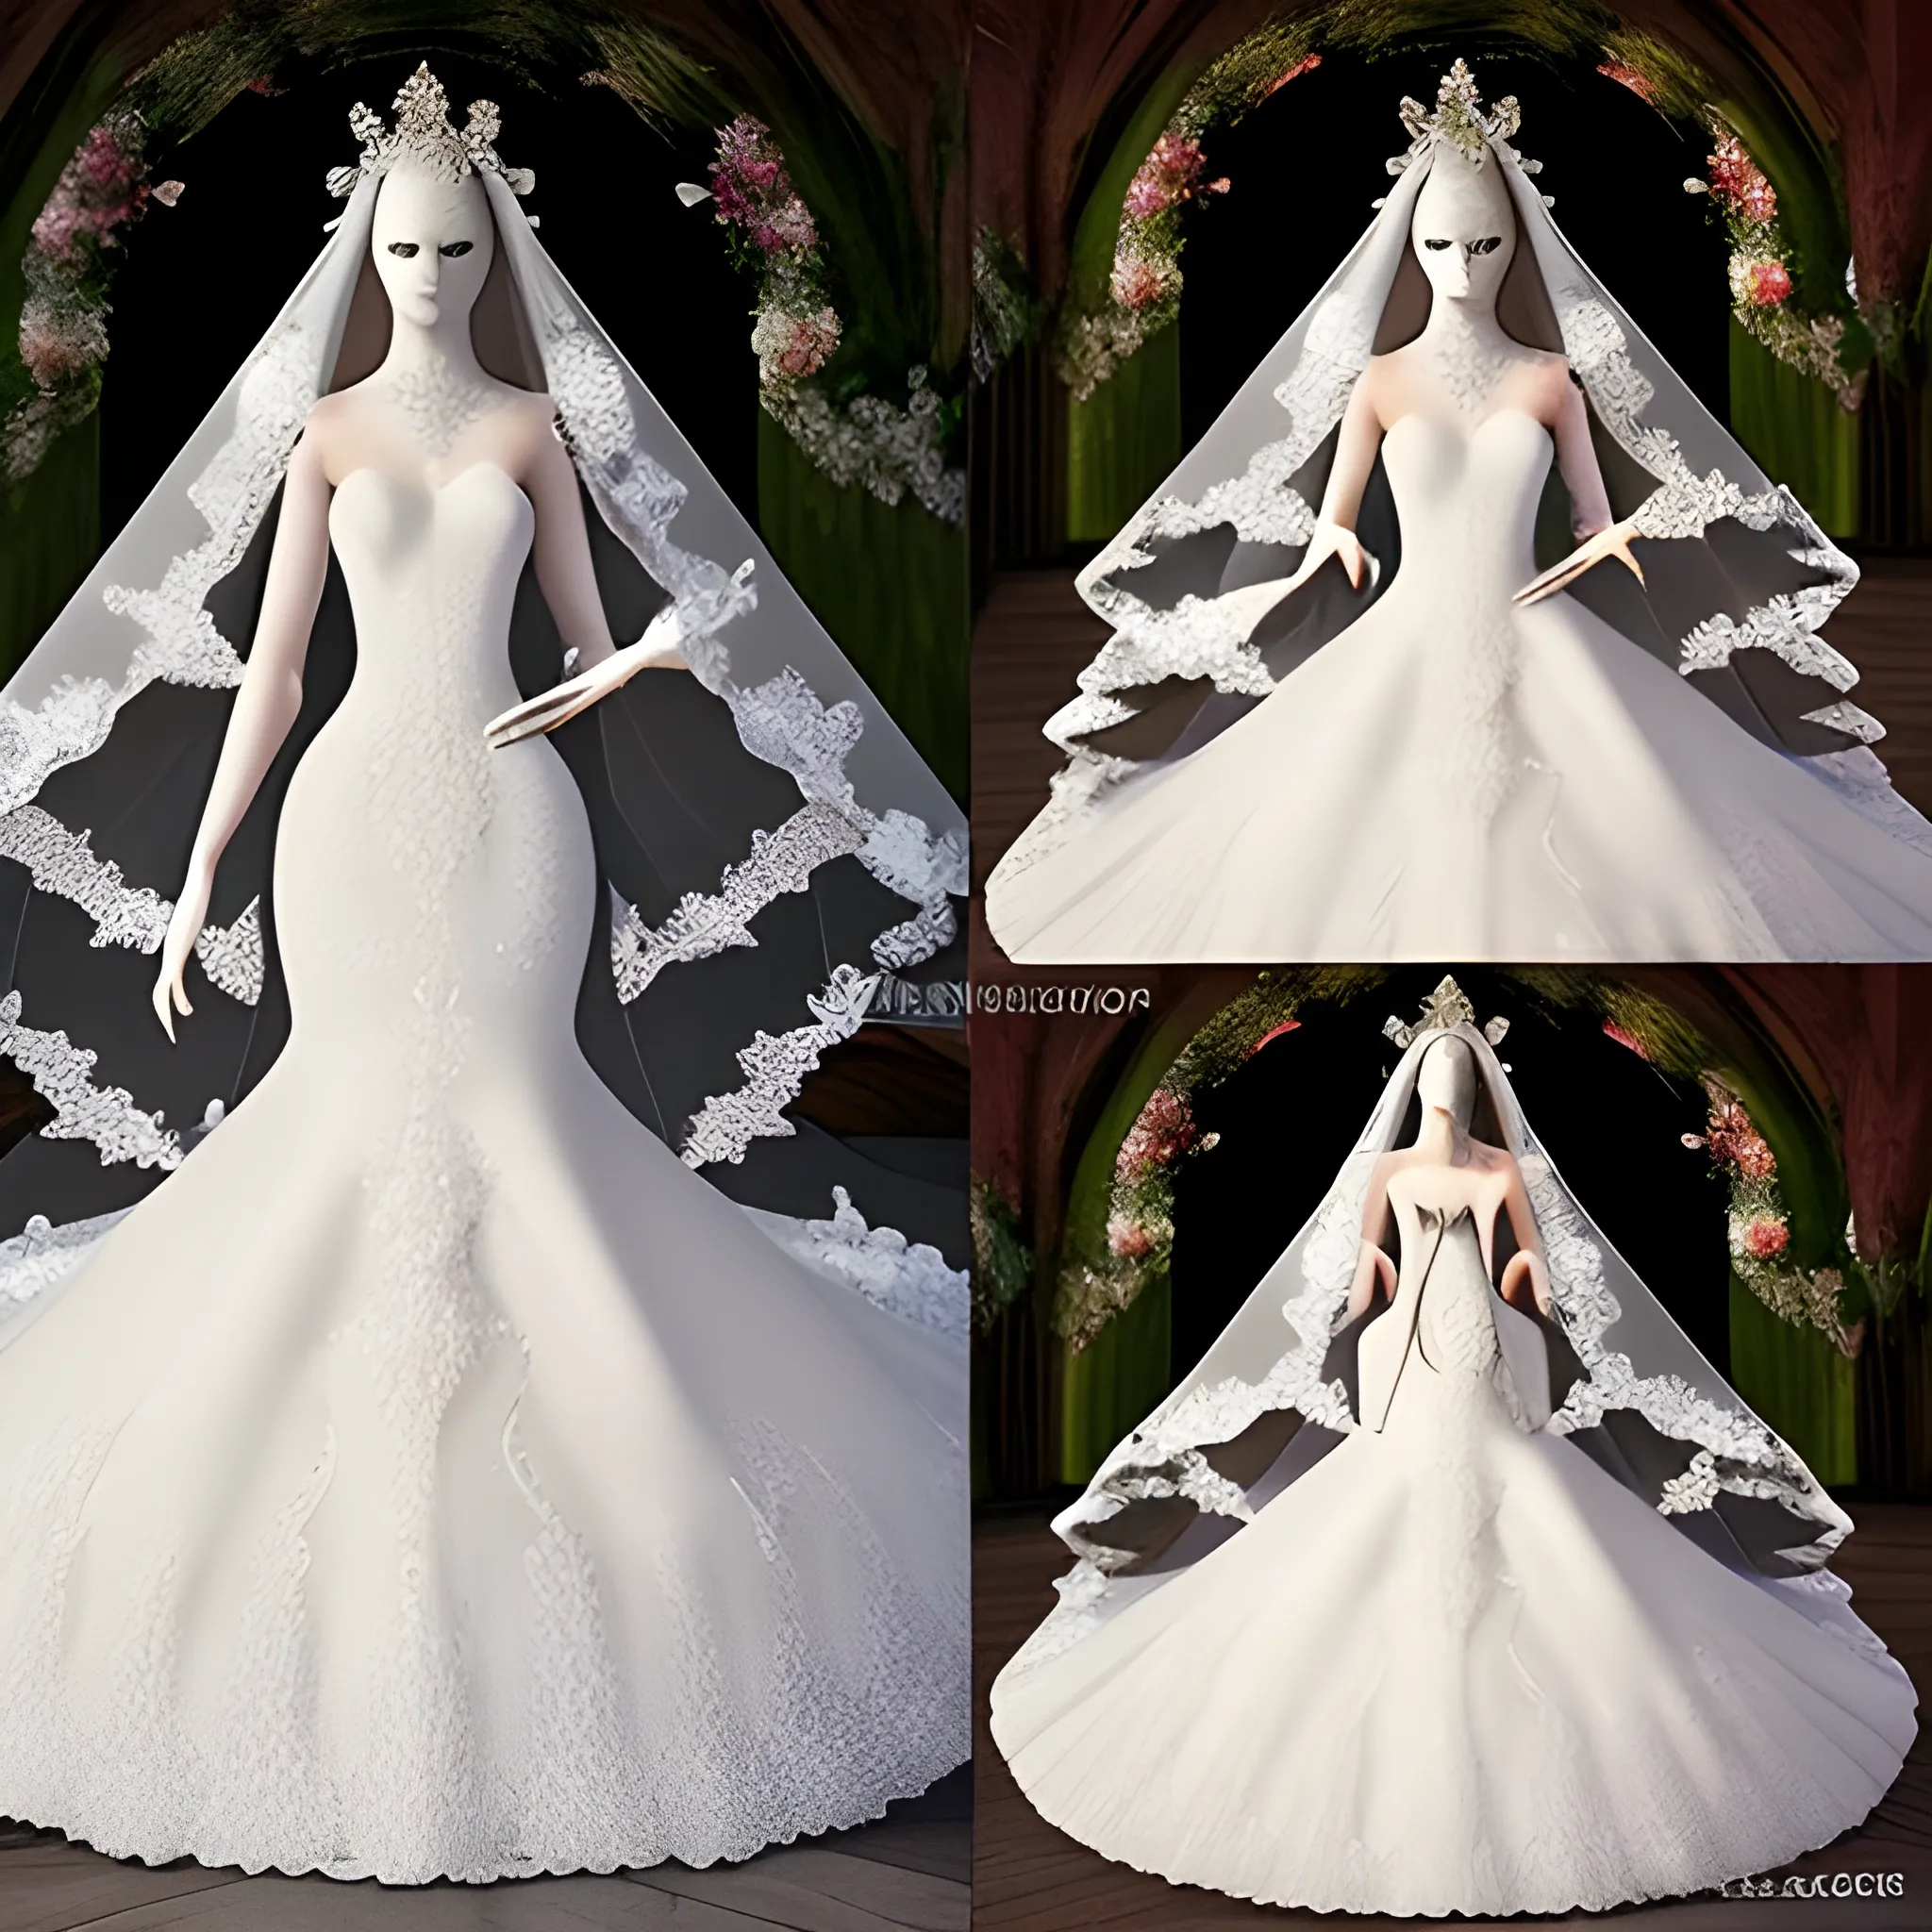 Ethereal goddess wedding dress majestic realistic extravagant design